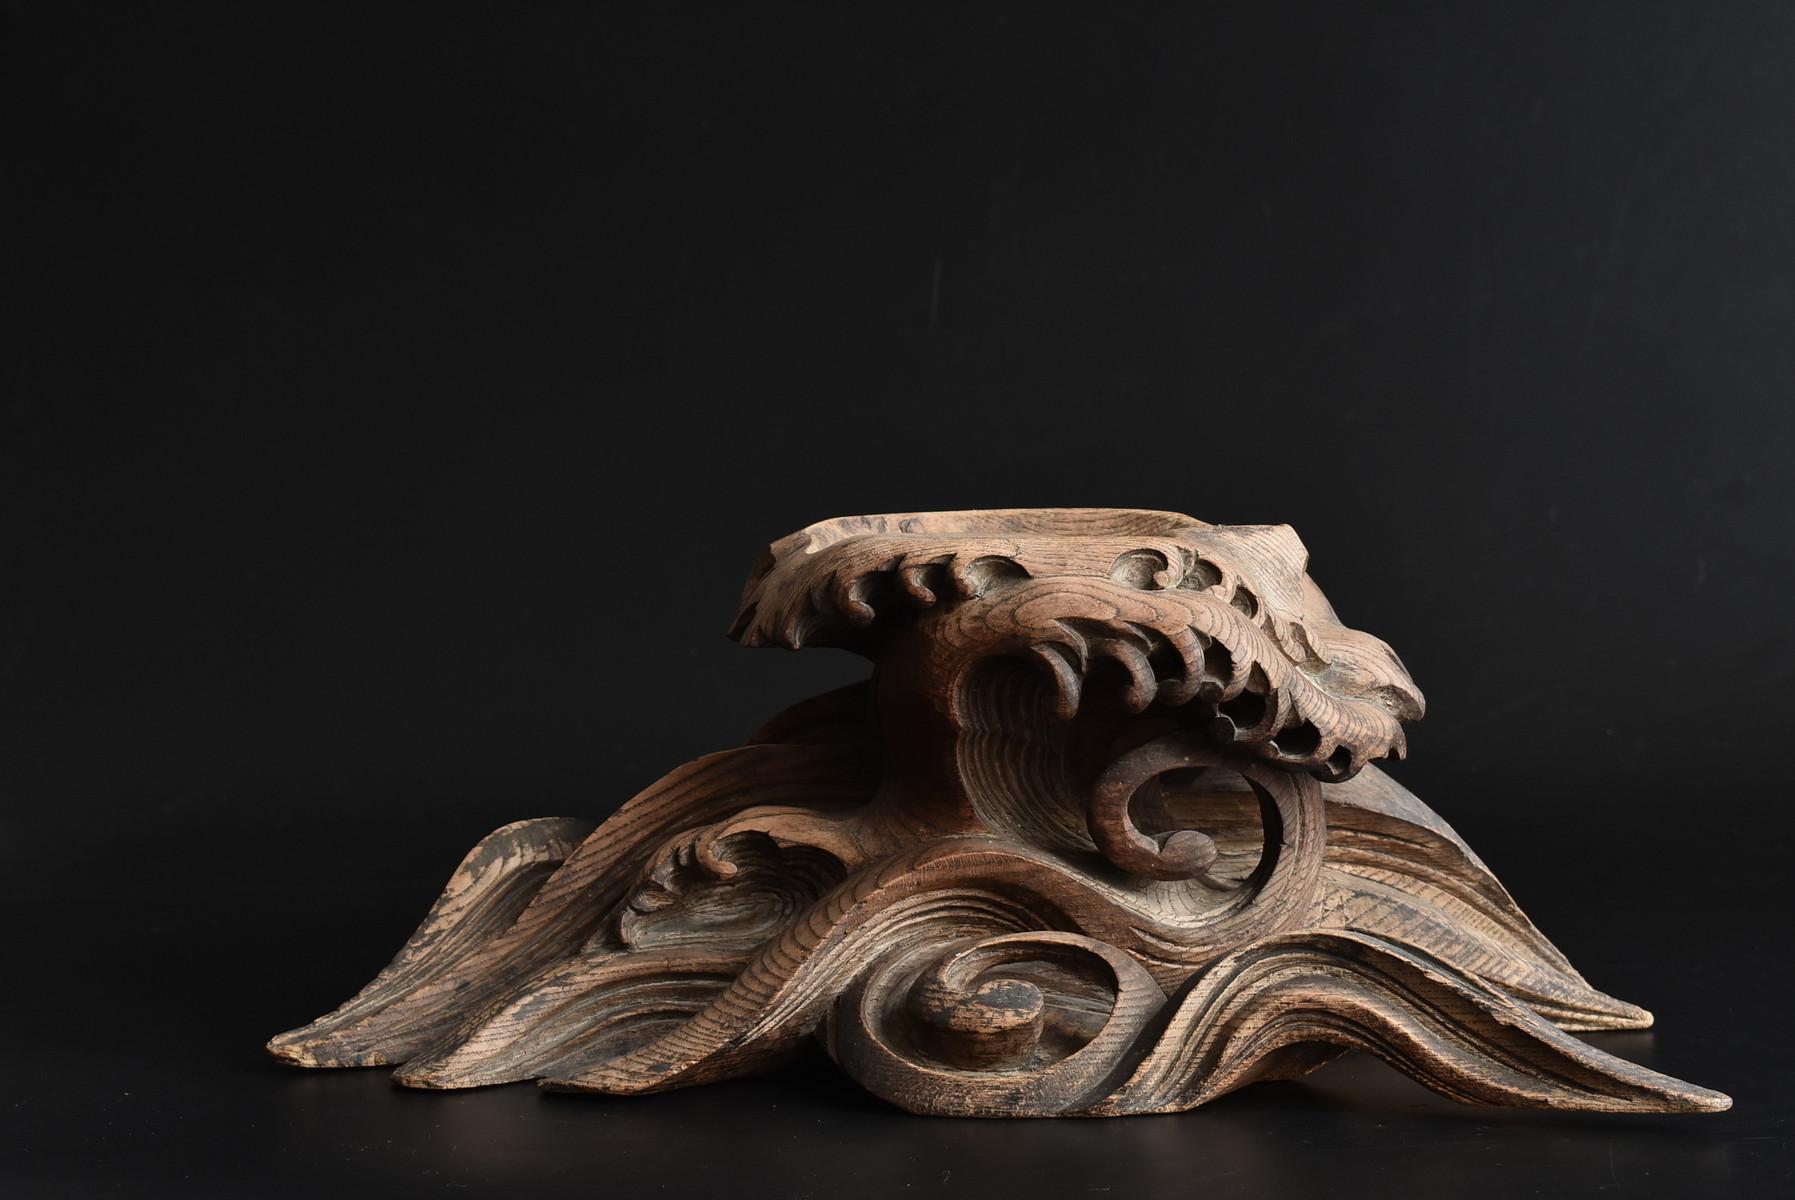 Japanese Antique Wood Carving Wavy Figurine / Incense Burner / Decoration Stand 8